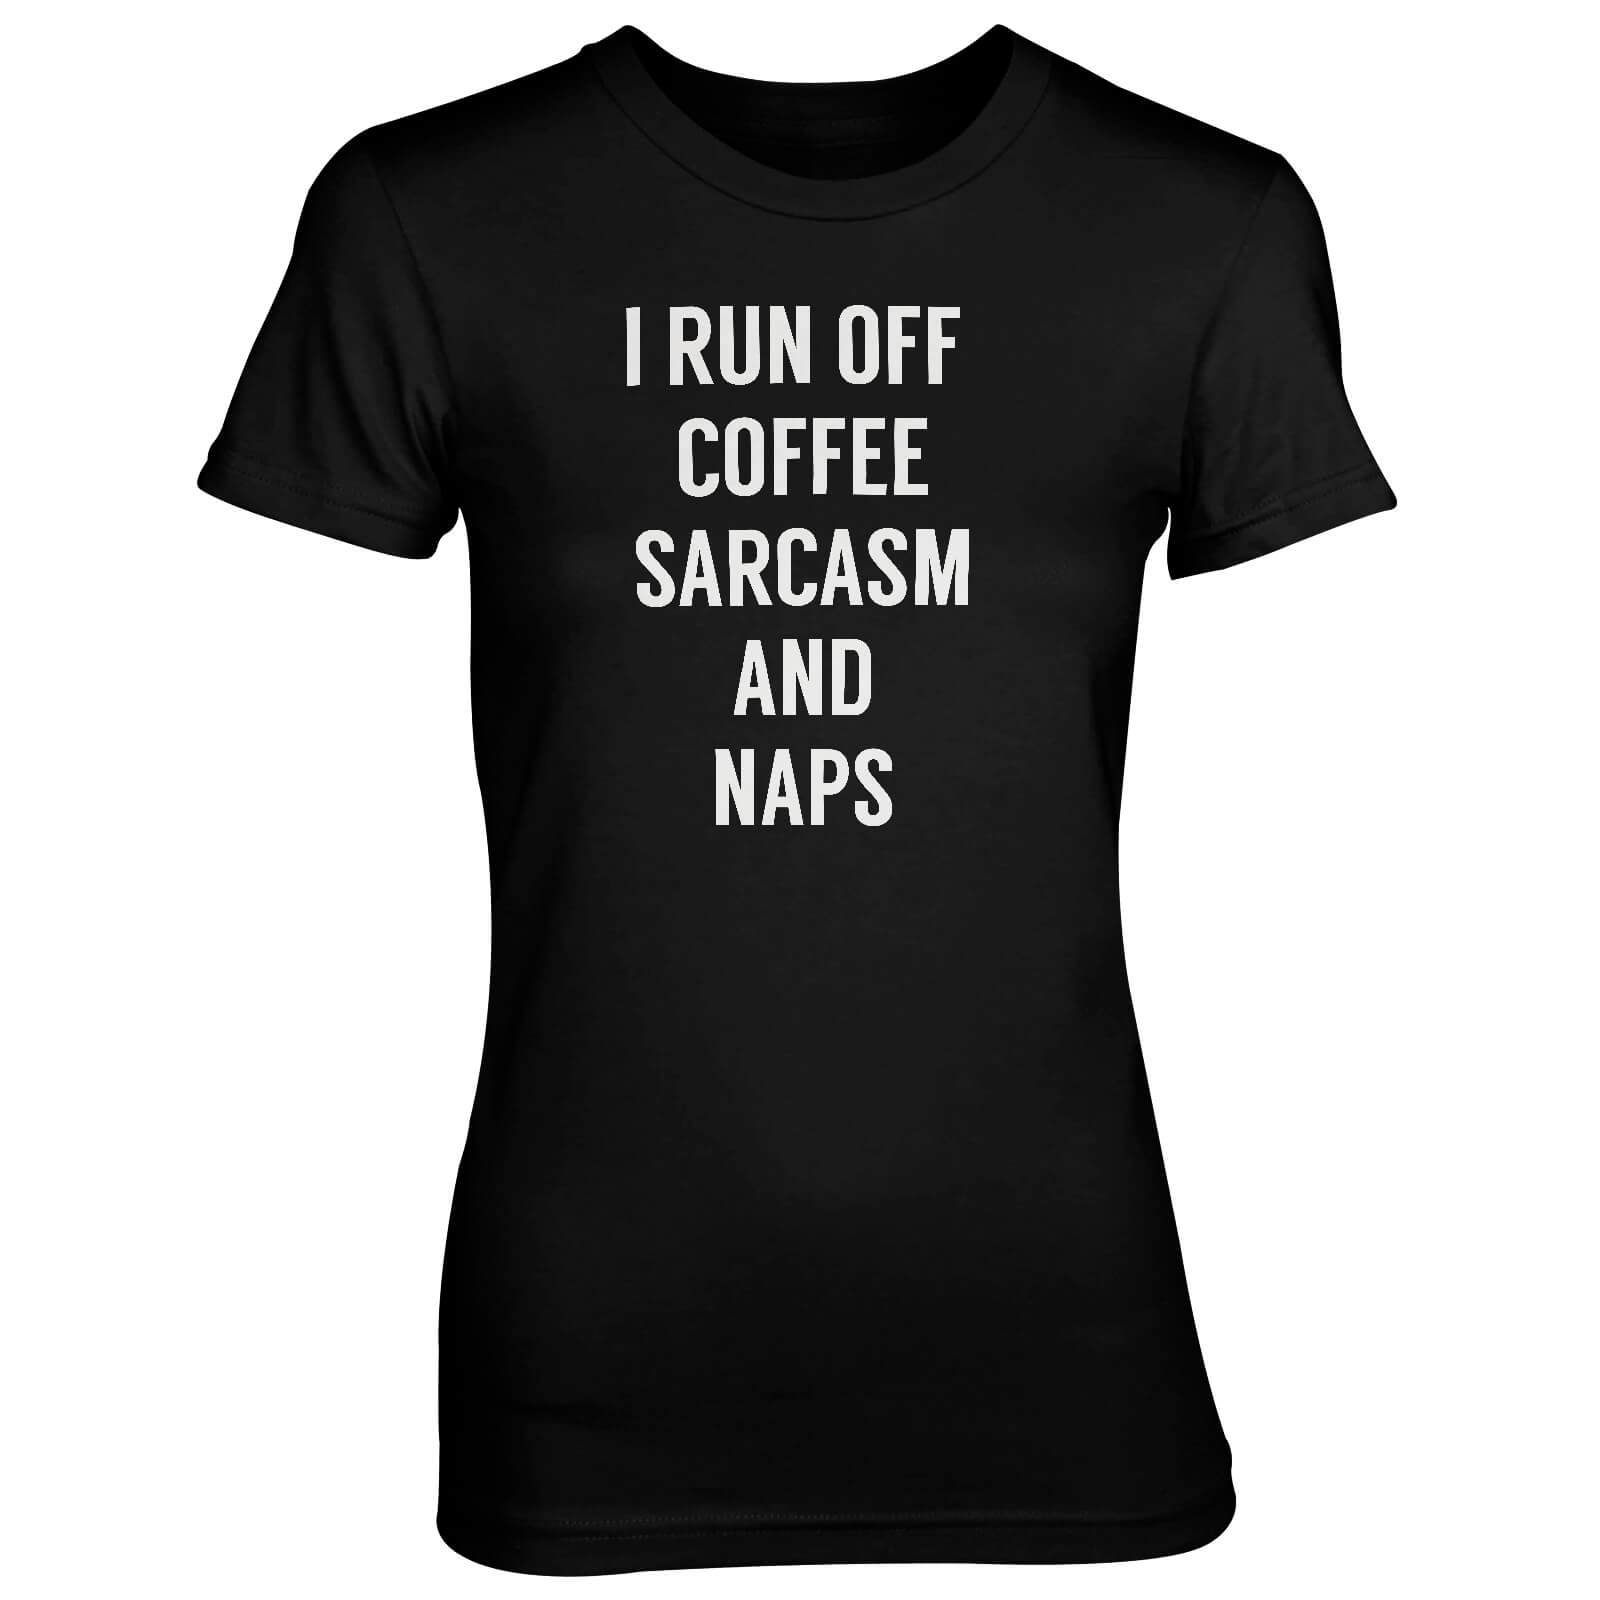 I Run Off Coffee Sarcasm And Naps Women's Black T-Shirt - S - Black